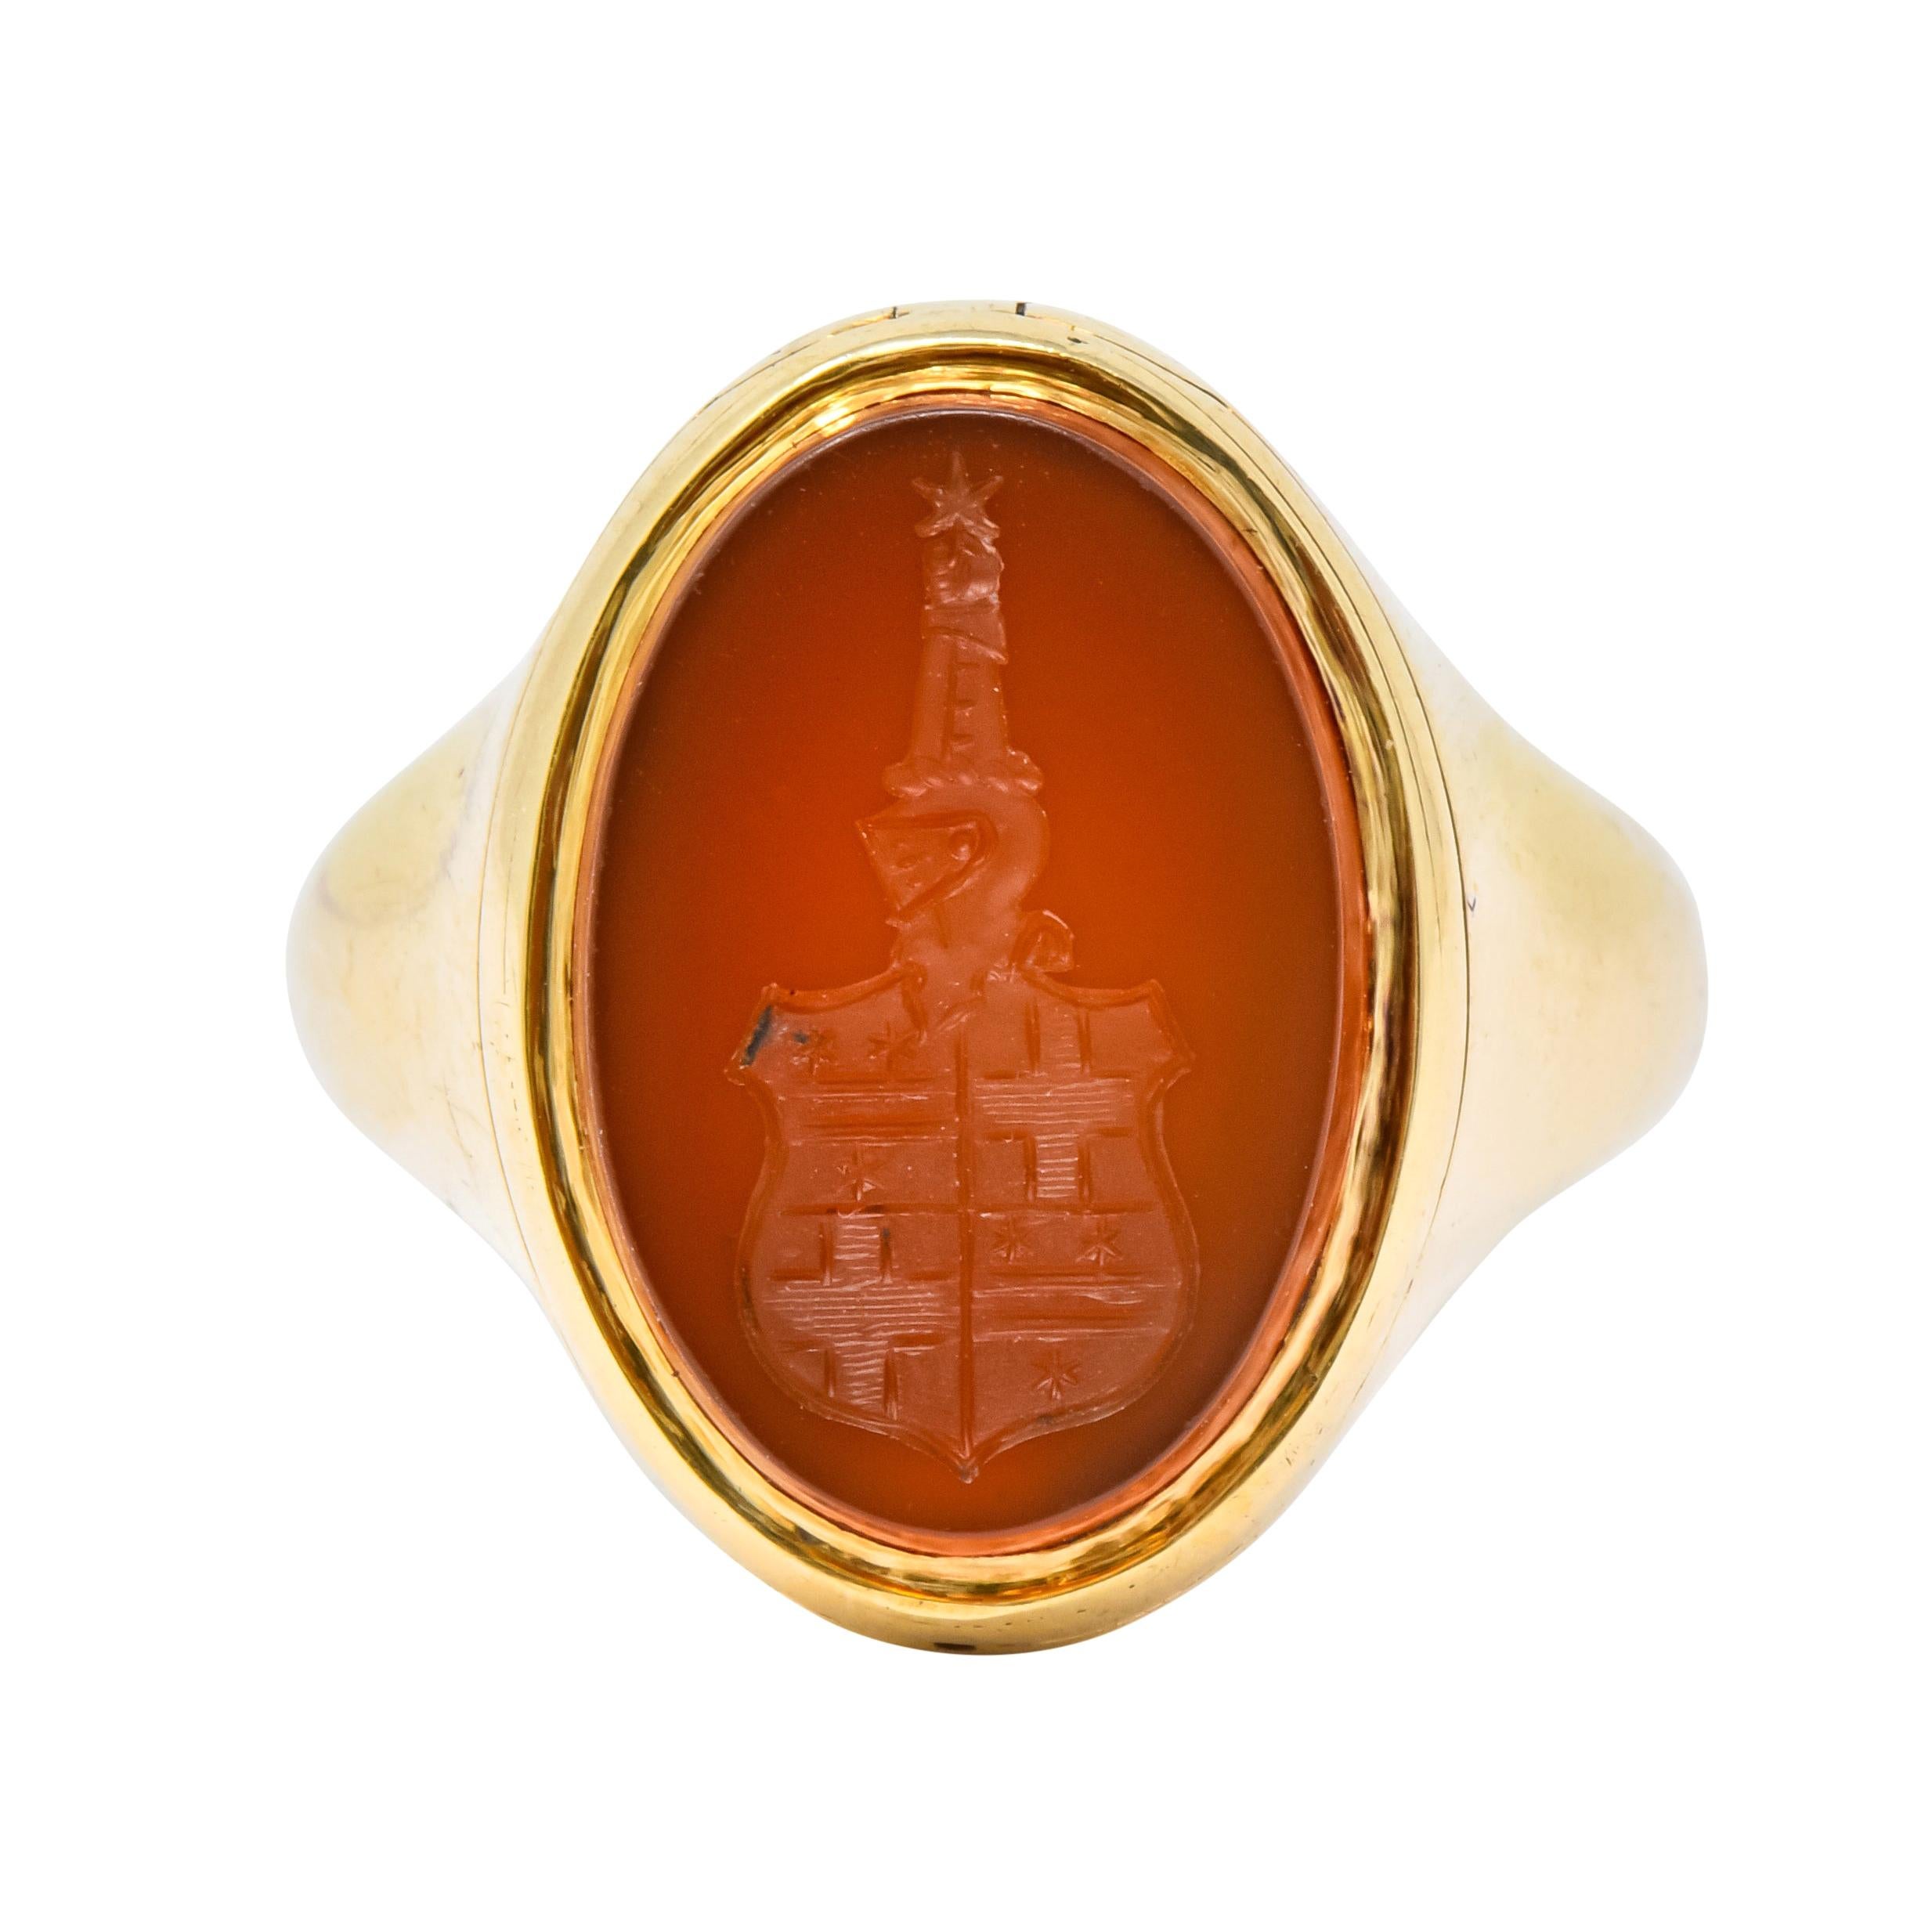 Victorian Carnelian Intaglio 14 Karat Gold Unisex Locket Ring